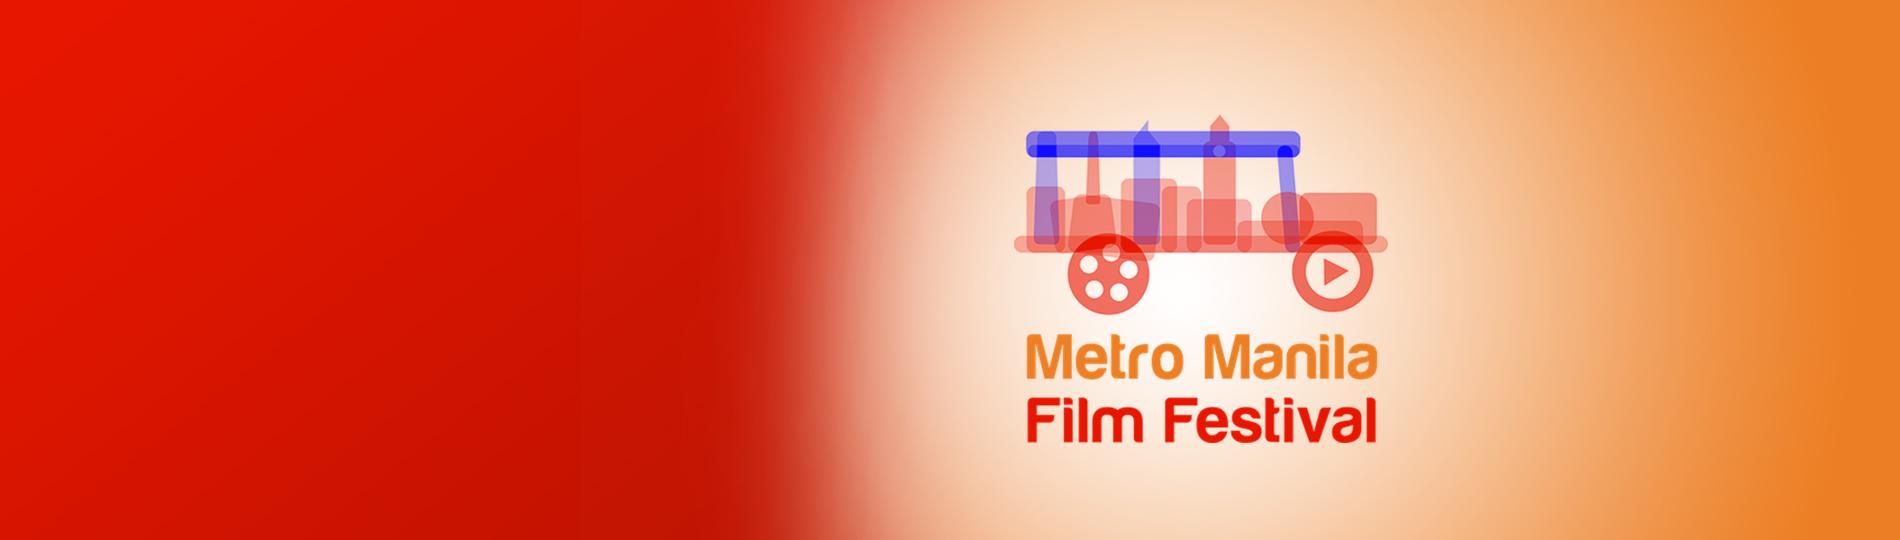 Metro Manila Film Festival GMA Entertainment Online Home of Kapuso